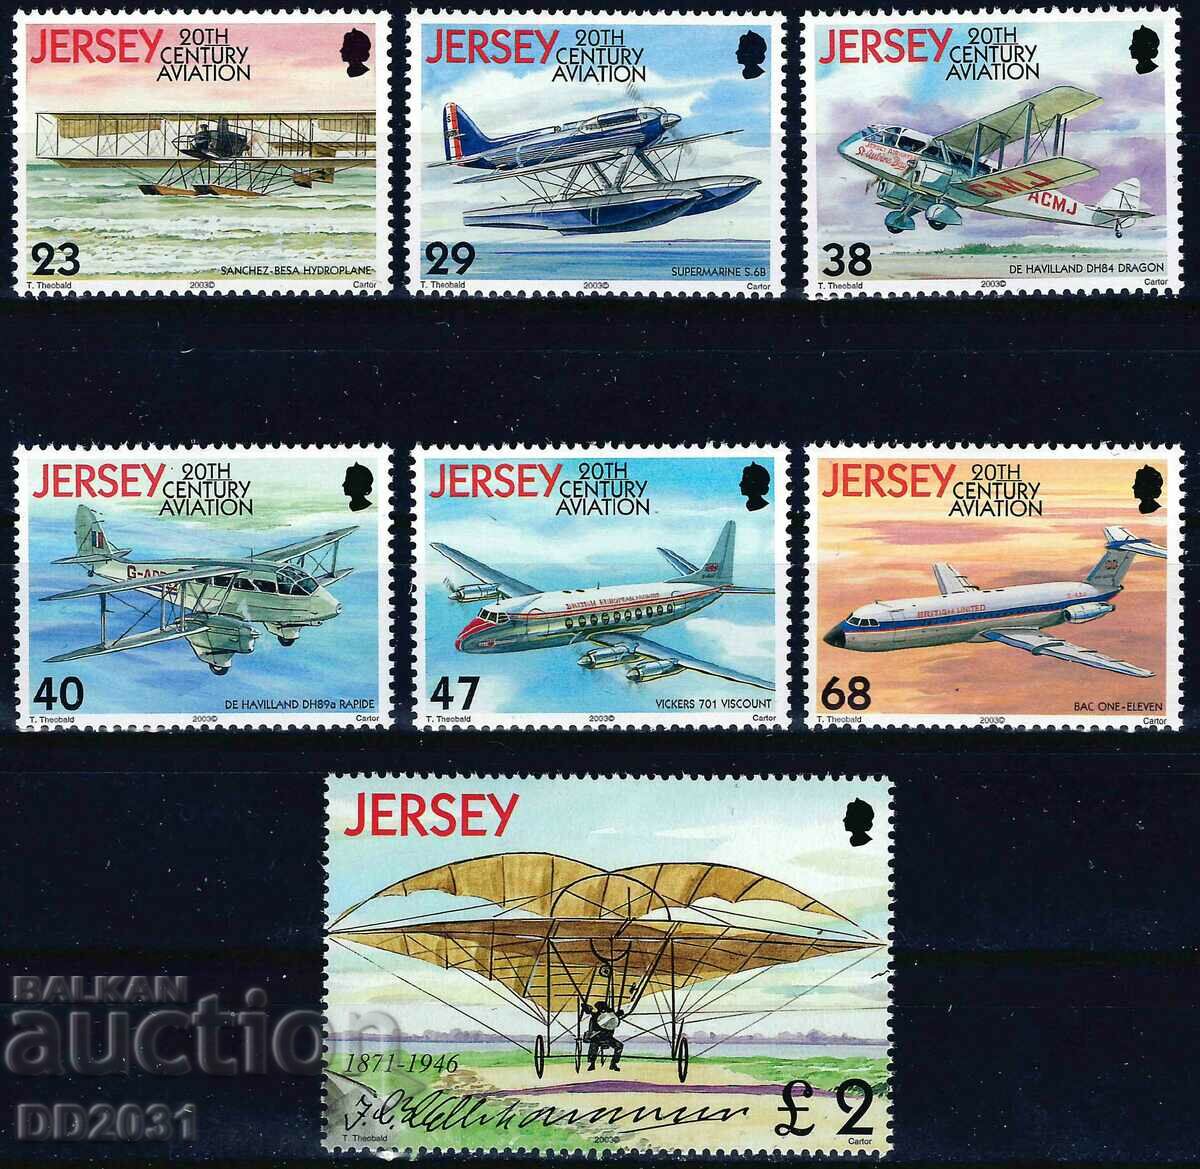 Jersey 2003 - MNH Aircraft